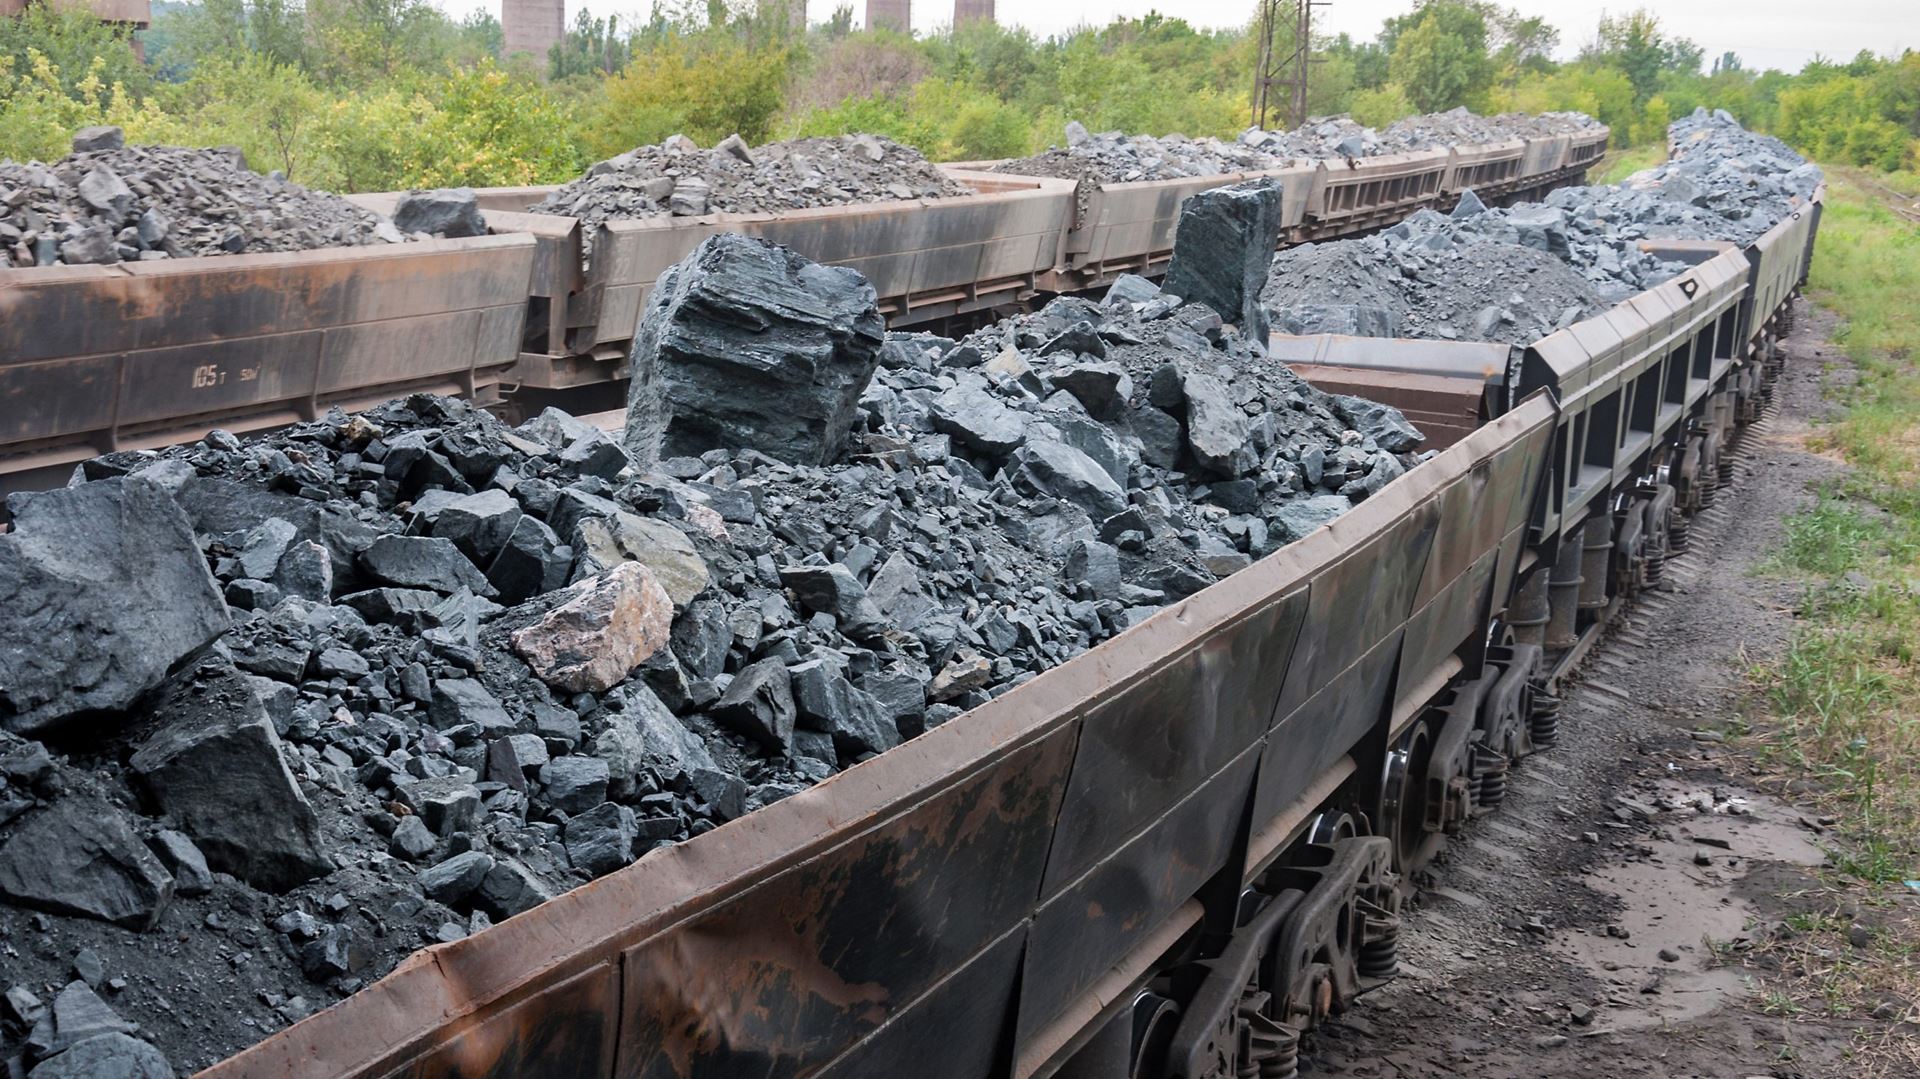 Ukraine exported 2.55 million tonnes of iron ore to the world market in February